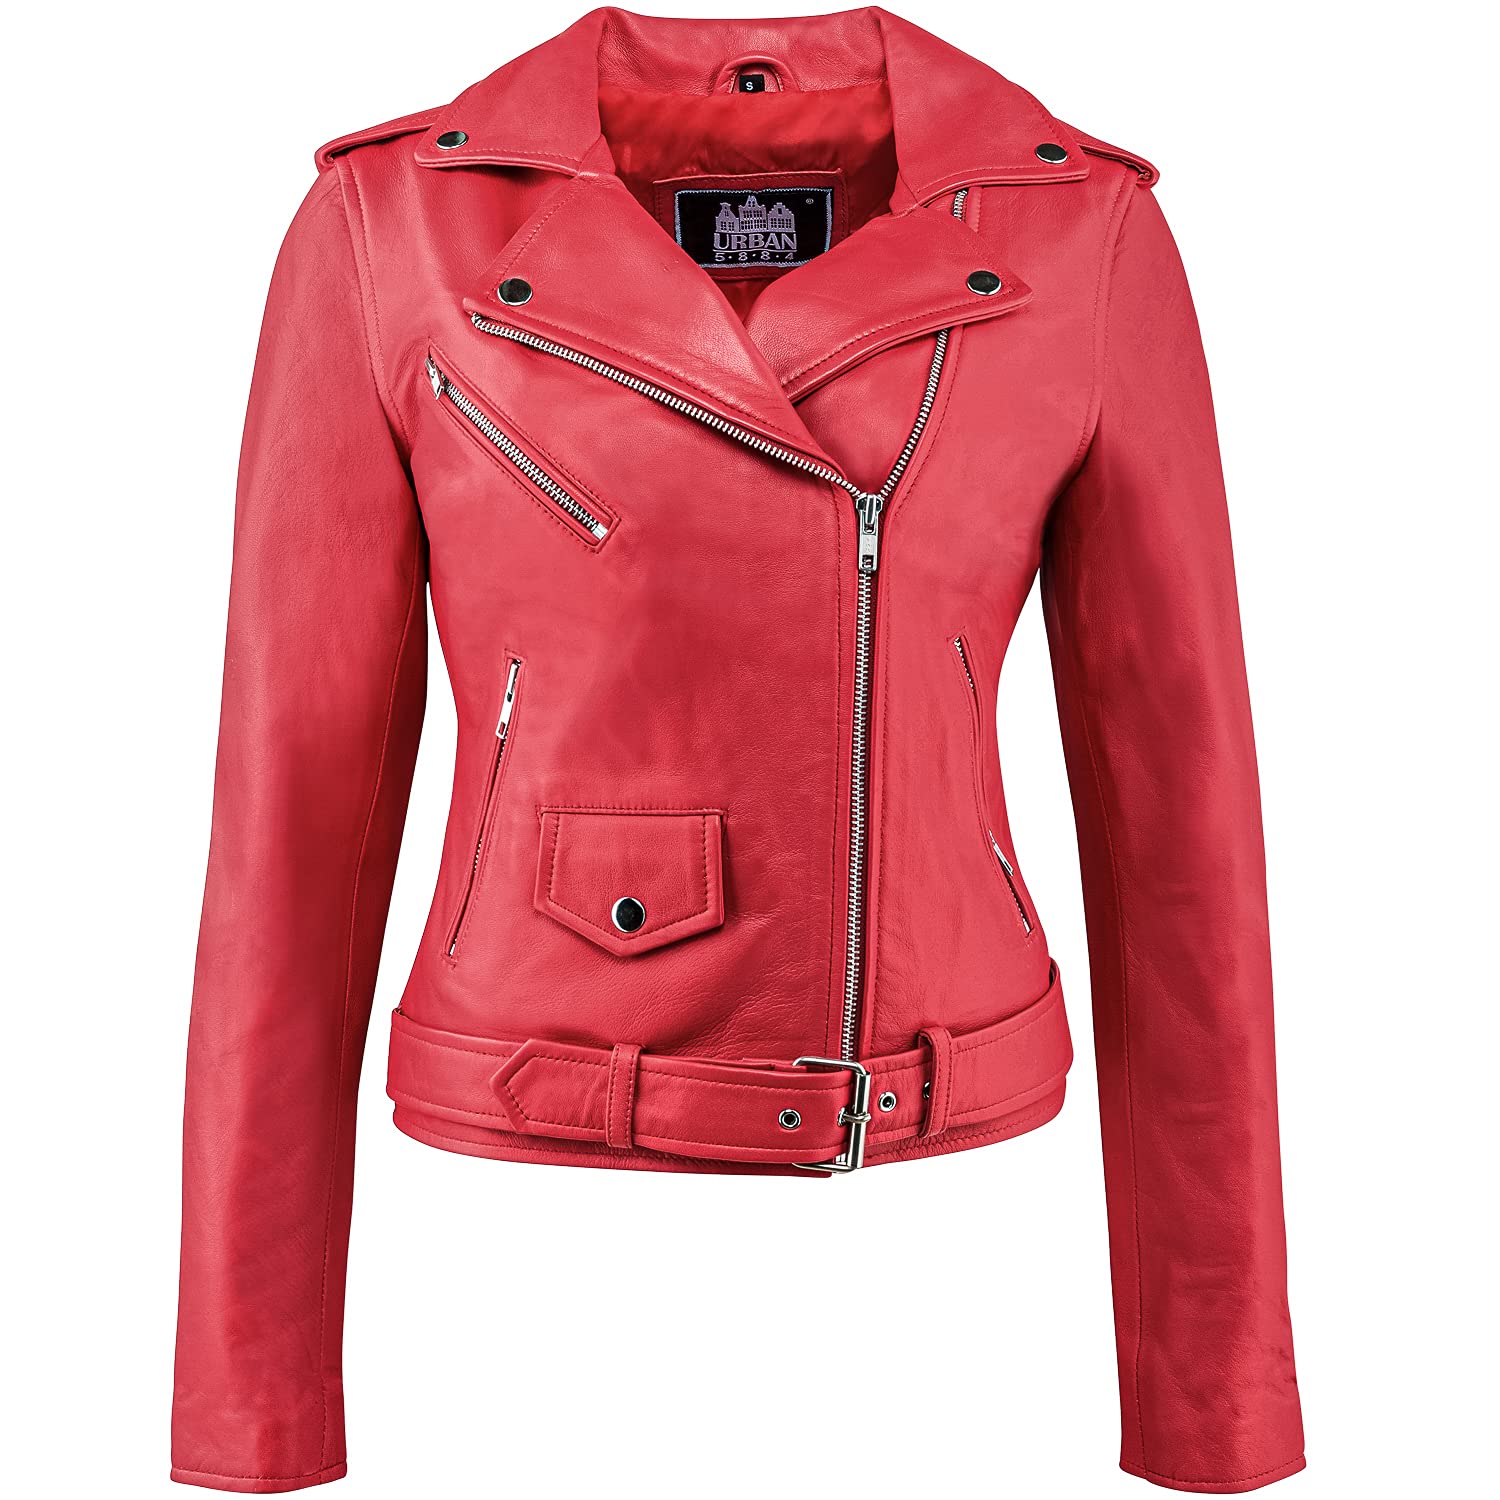 URBAN LEATHER Damen Ur-195 Perfecto Retro Damen Lederjacke rot lamm nappa, Rot, XL EU von Urban Leather